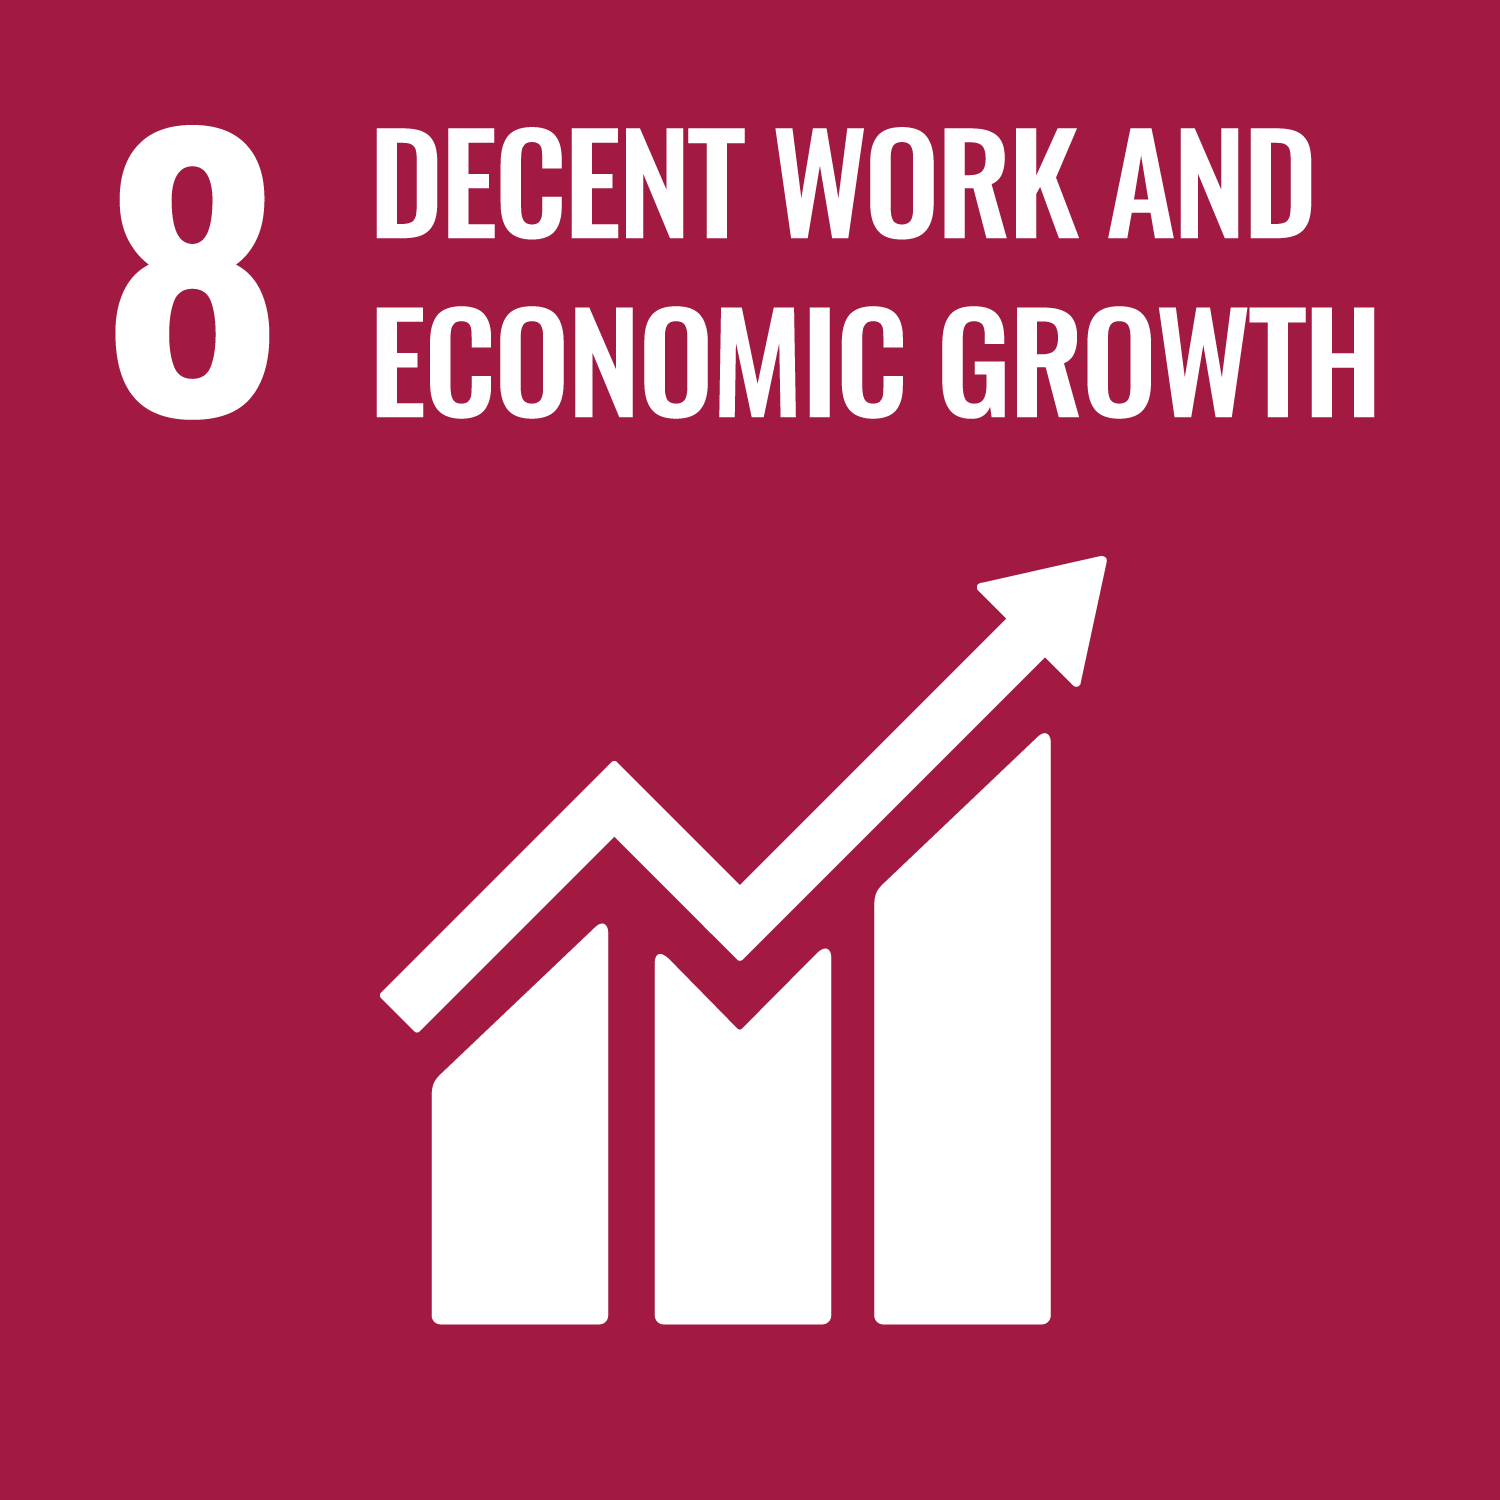 SDGs Goal 8: Decent work and economic growth